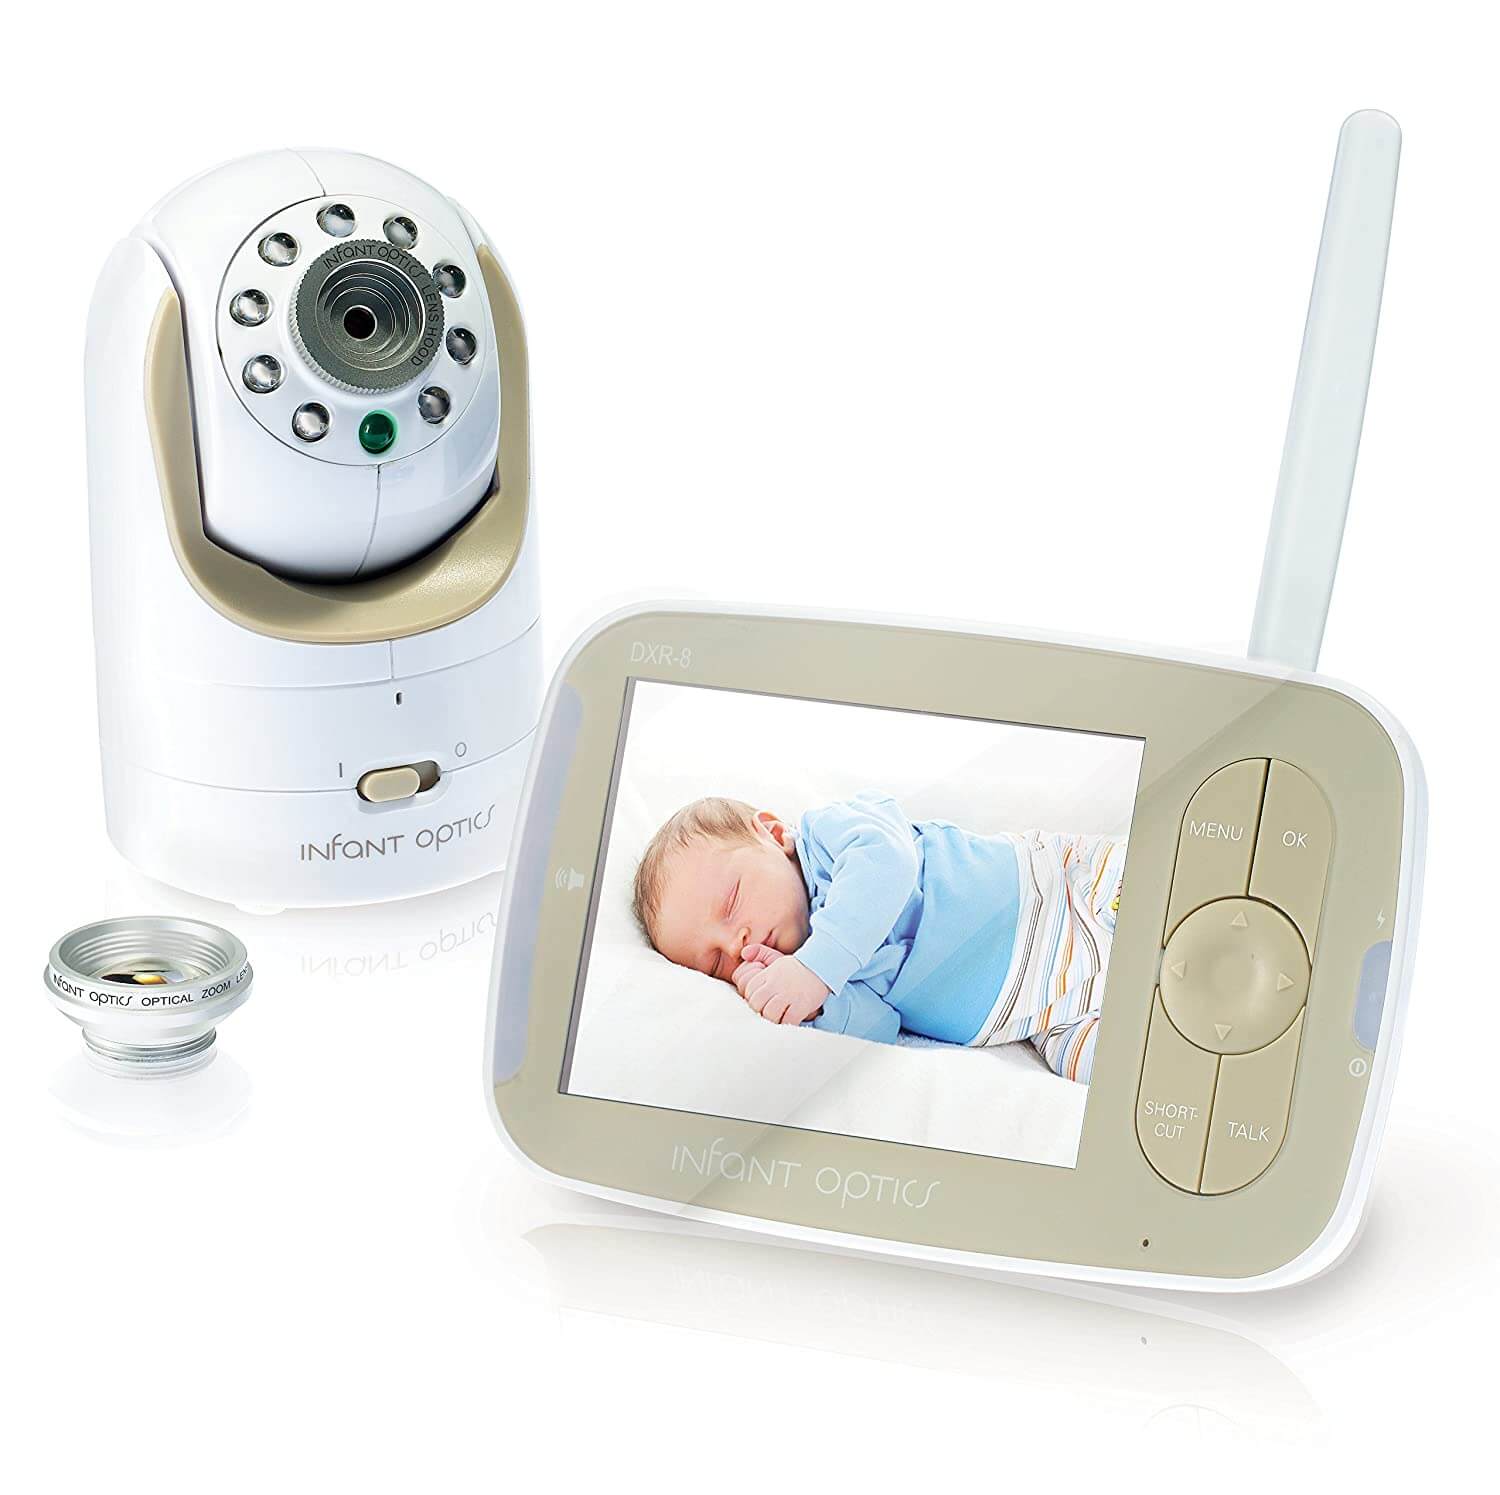 Infant Optics DXR 8 Video Baby Monitor